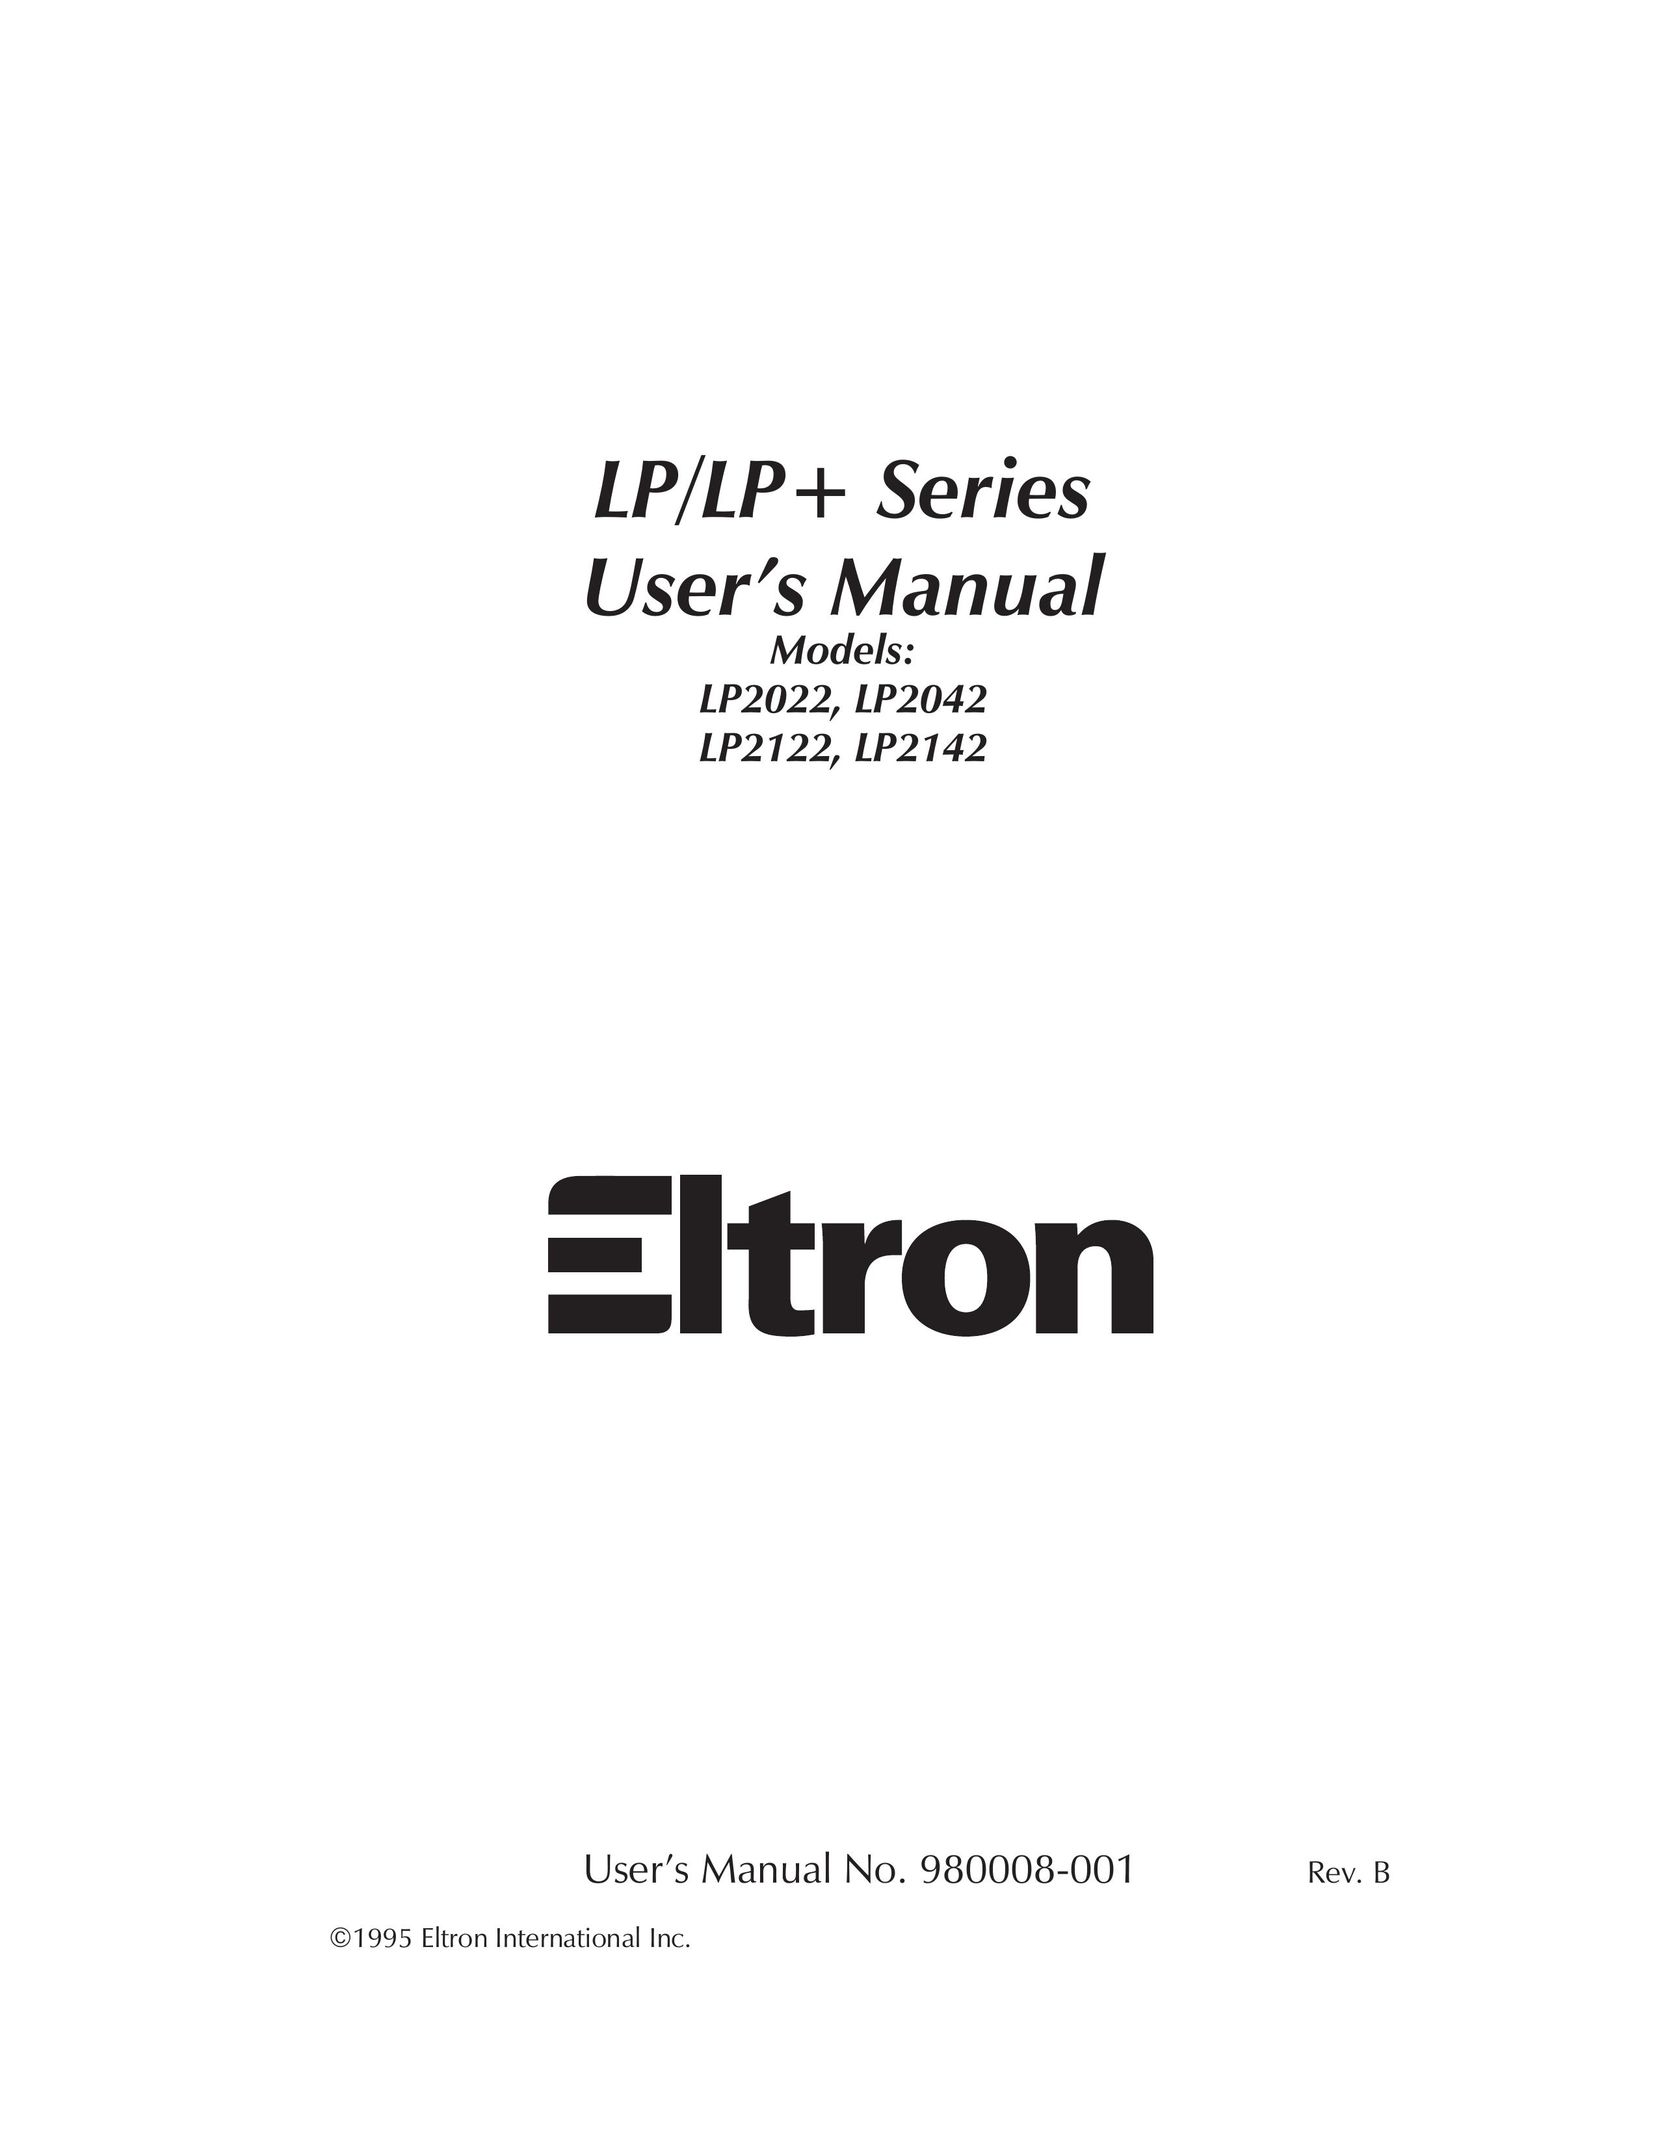 The Eltron Company LP2022 Printer User Manual